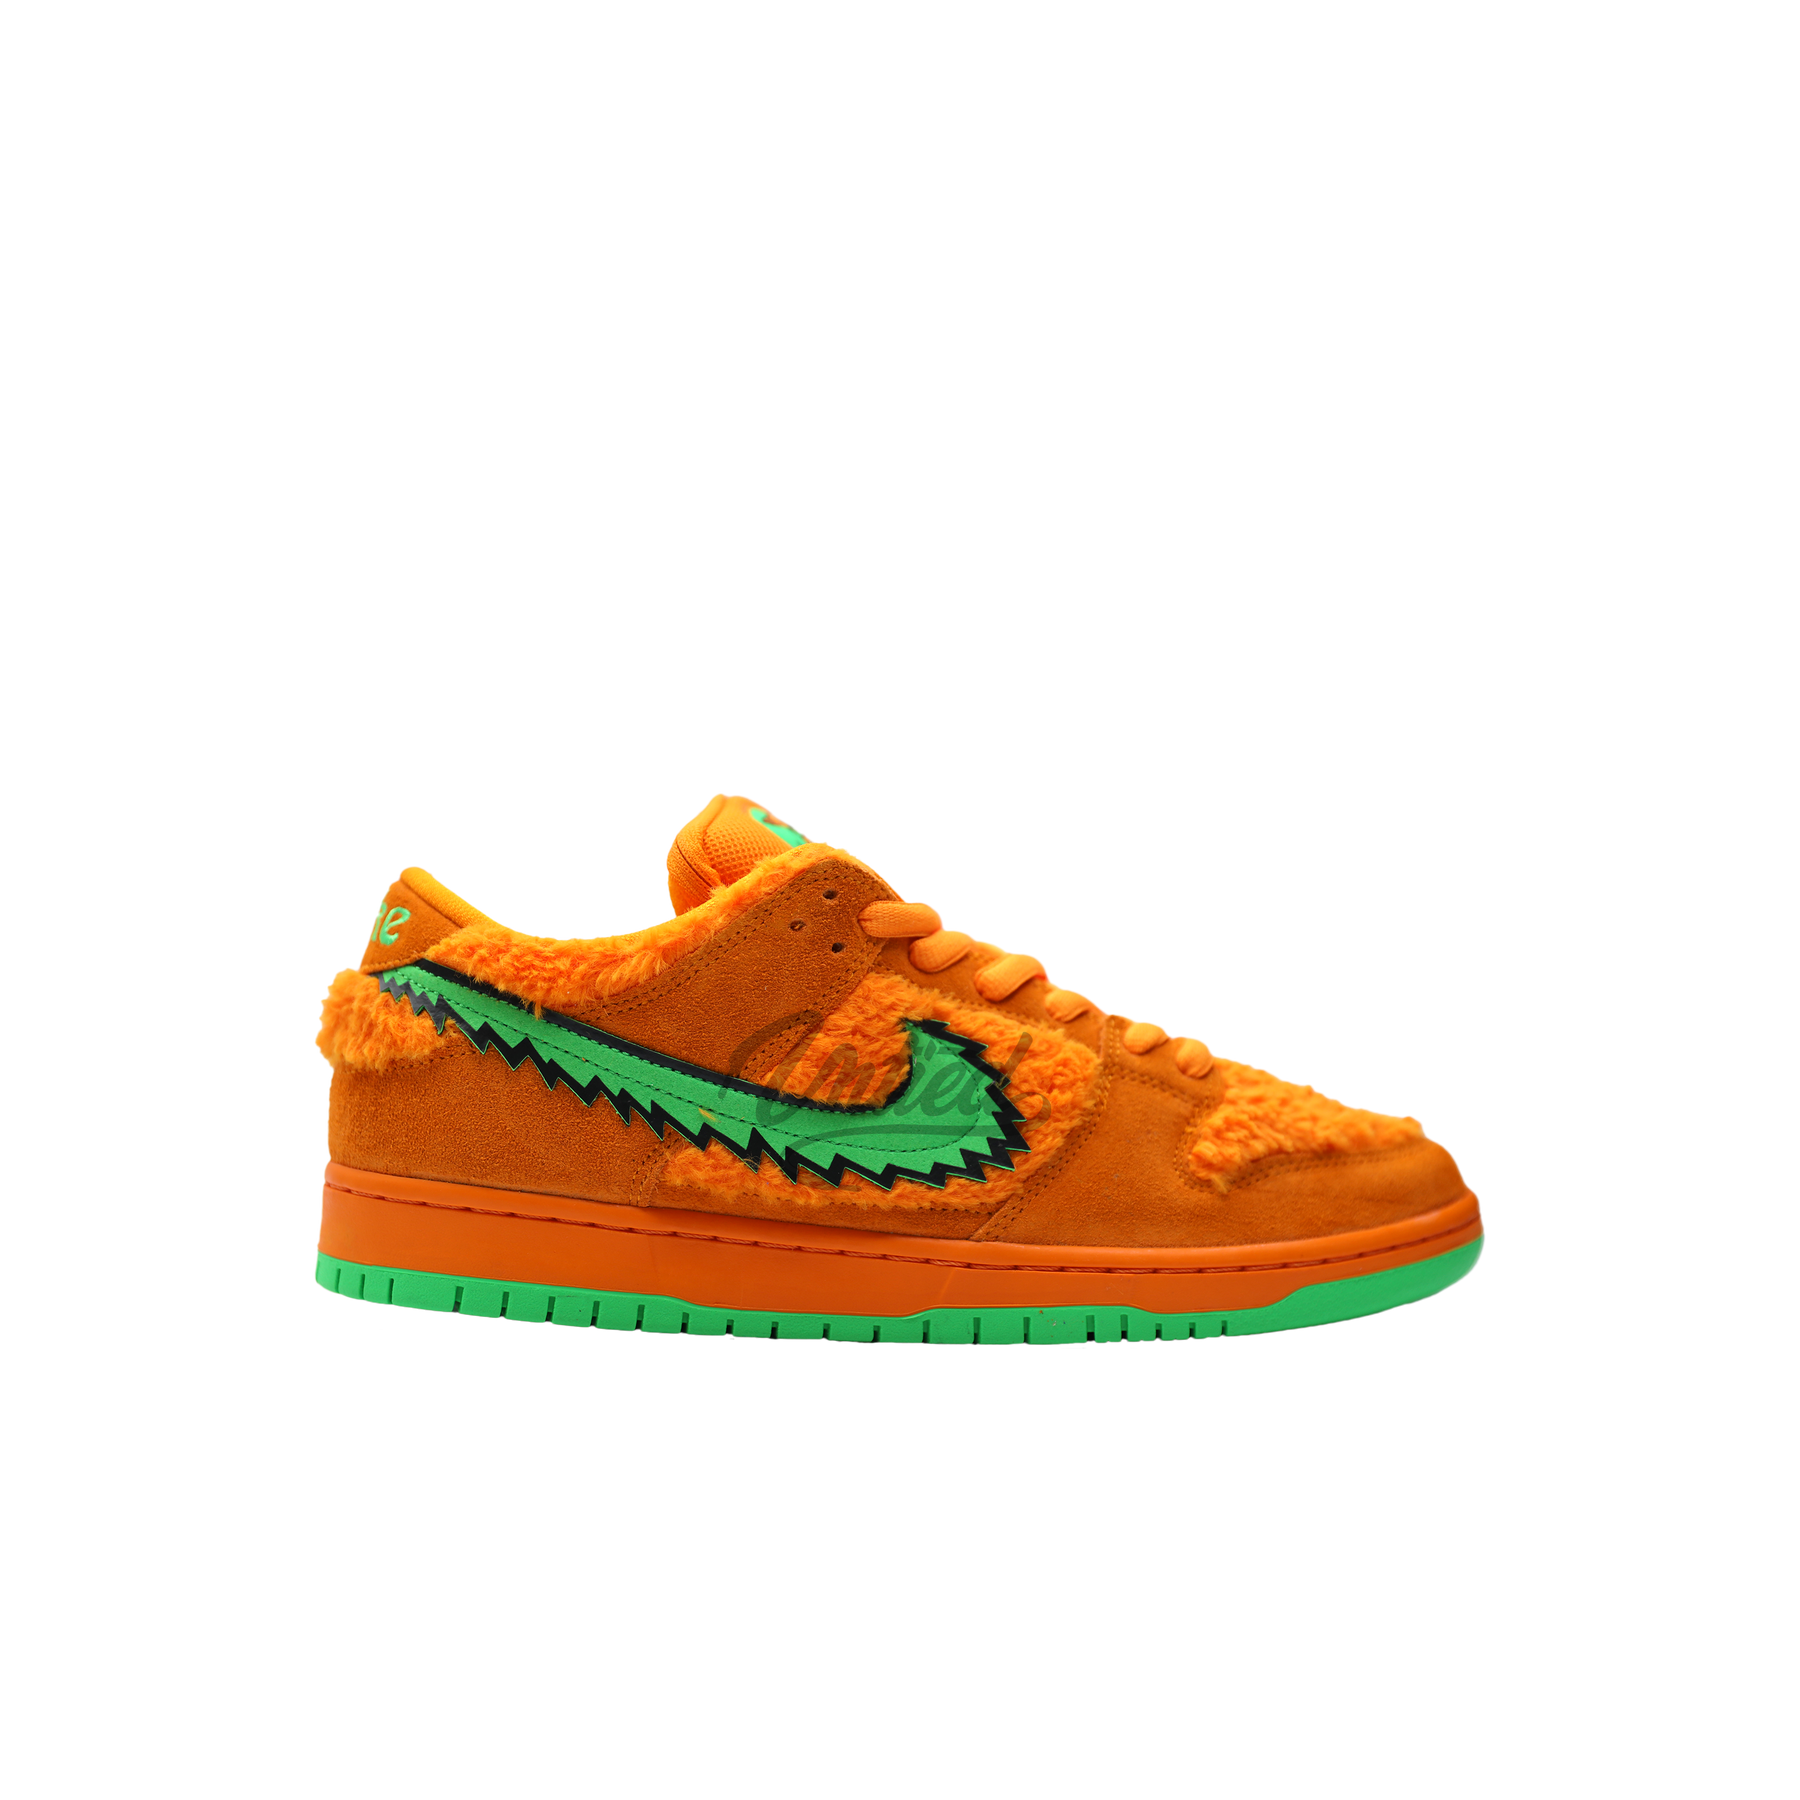 Nike Dunk SB Grateful Dead "Orange"